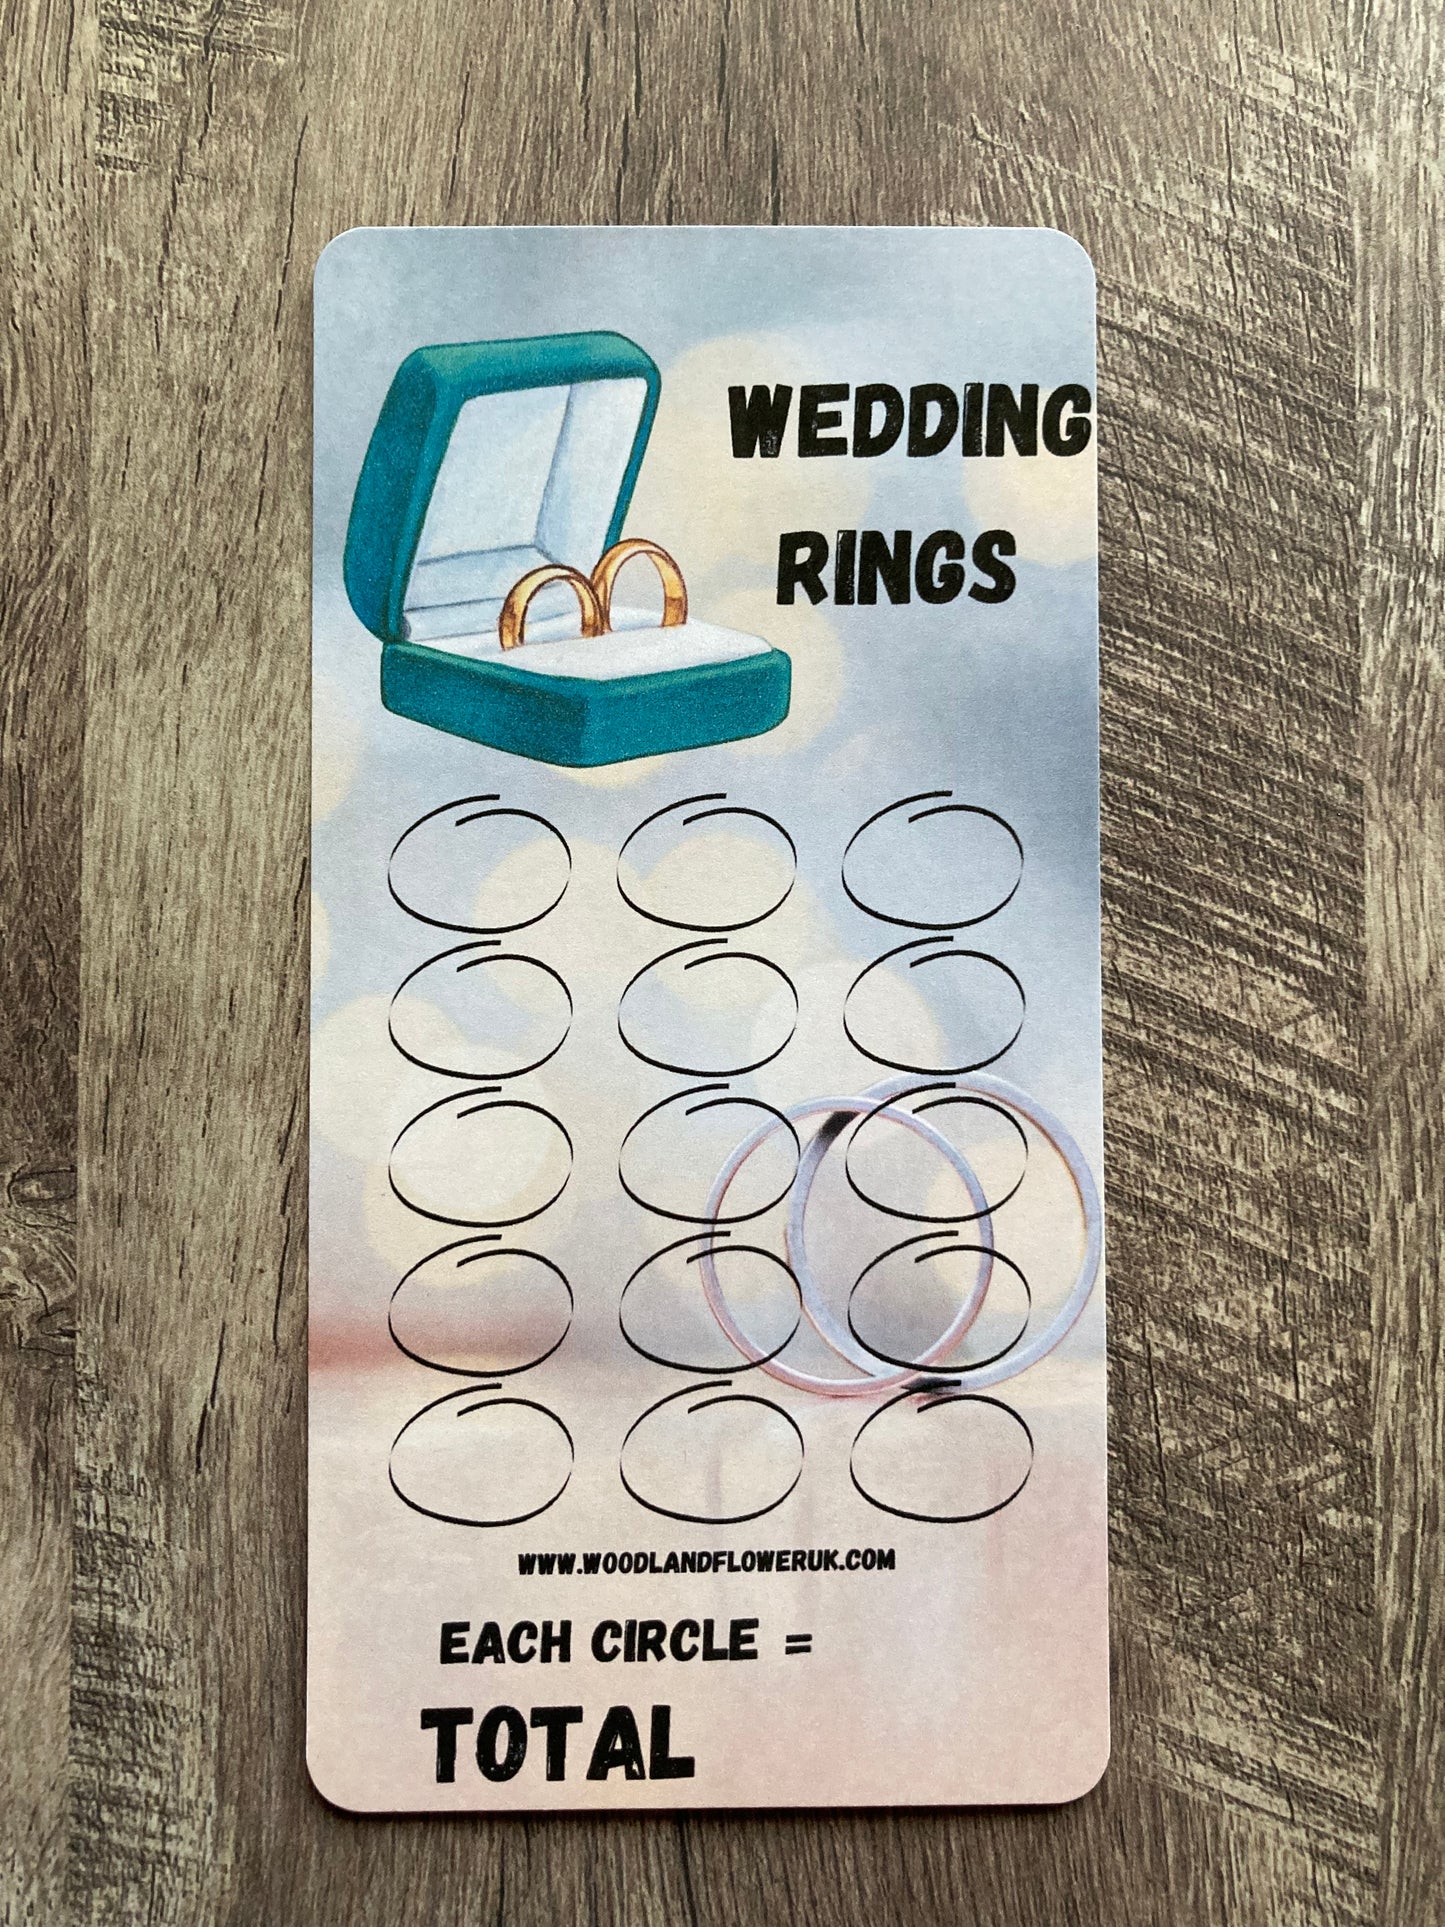 Saving challenge “wedding rings”